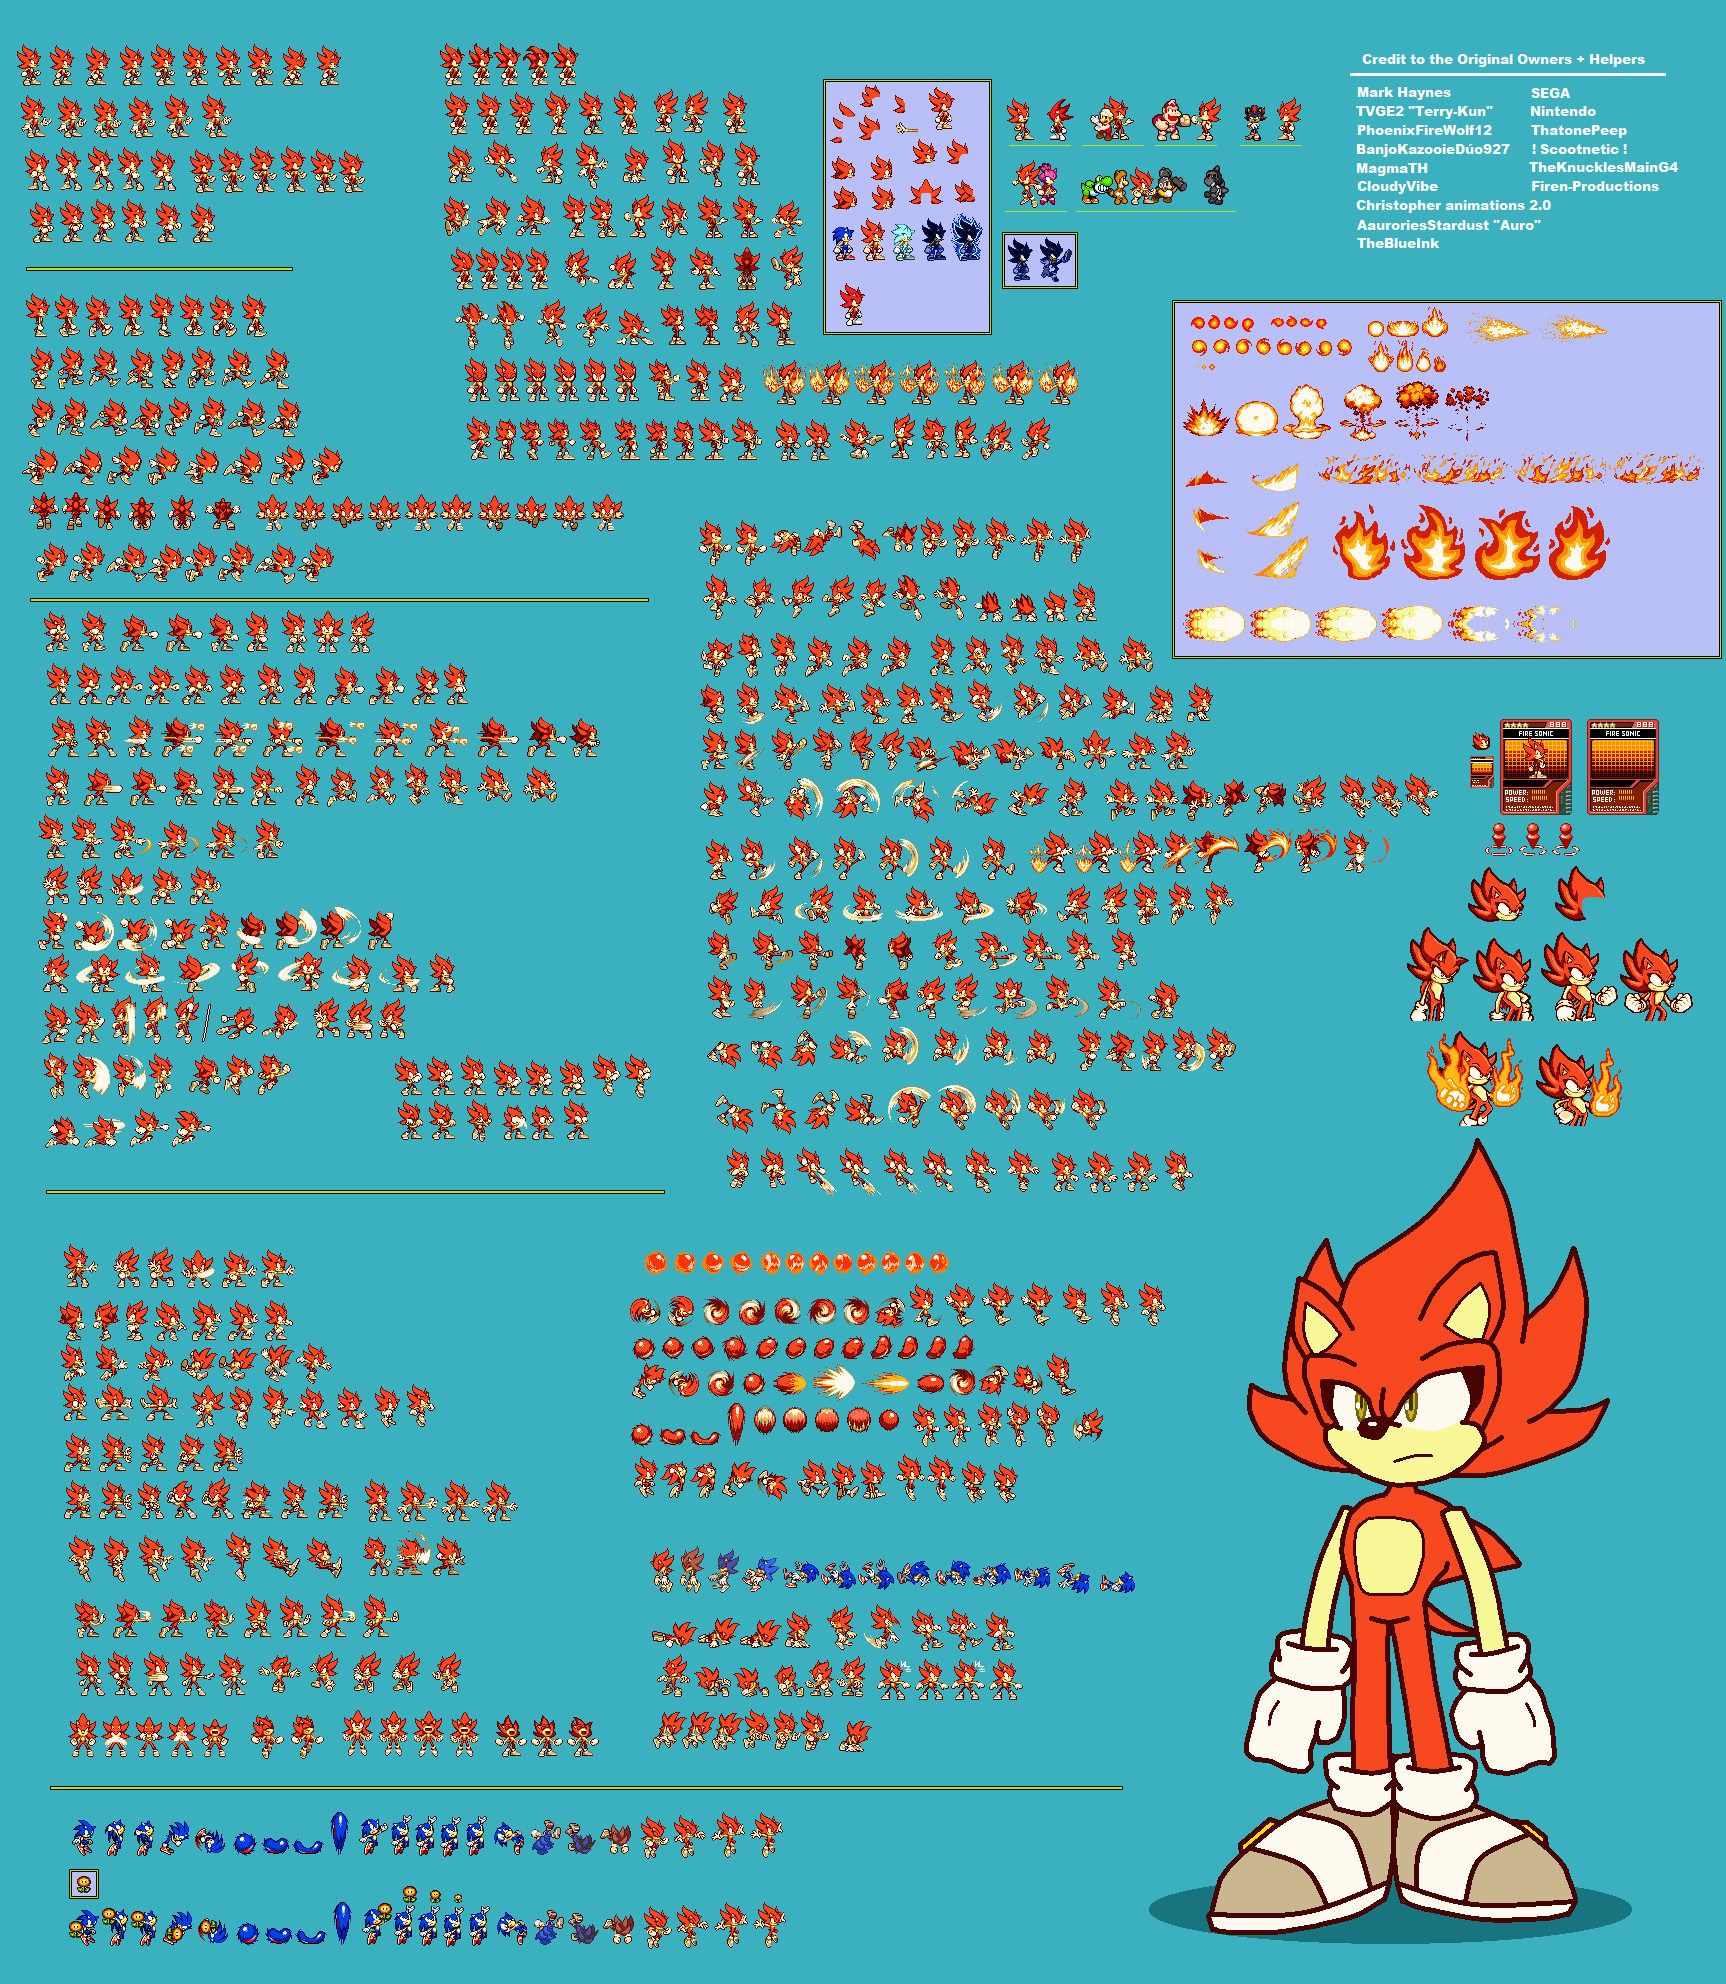 Mecha Sonic Sprite Sheet by TheKnucklesMainG4 on DeviantArt